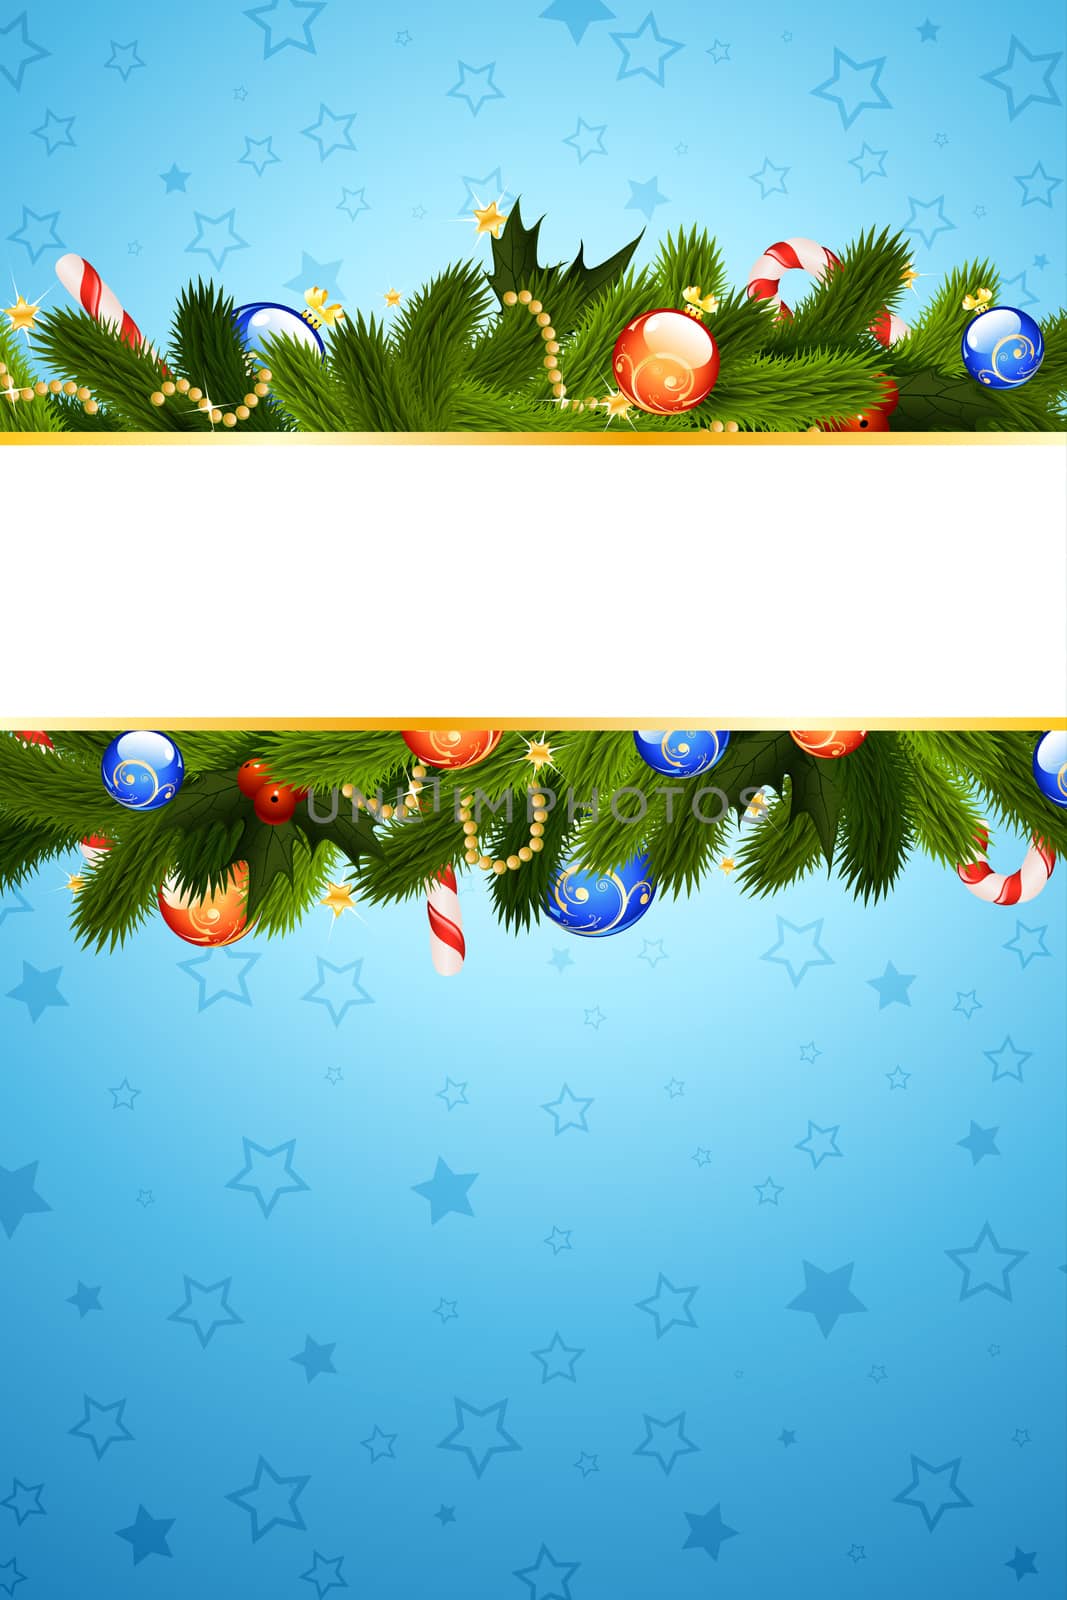 Christmas Card Template with fir-tree mistletoe decoration and stars